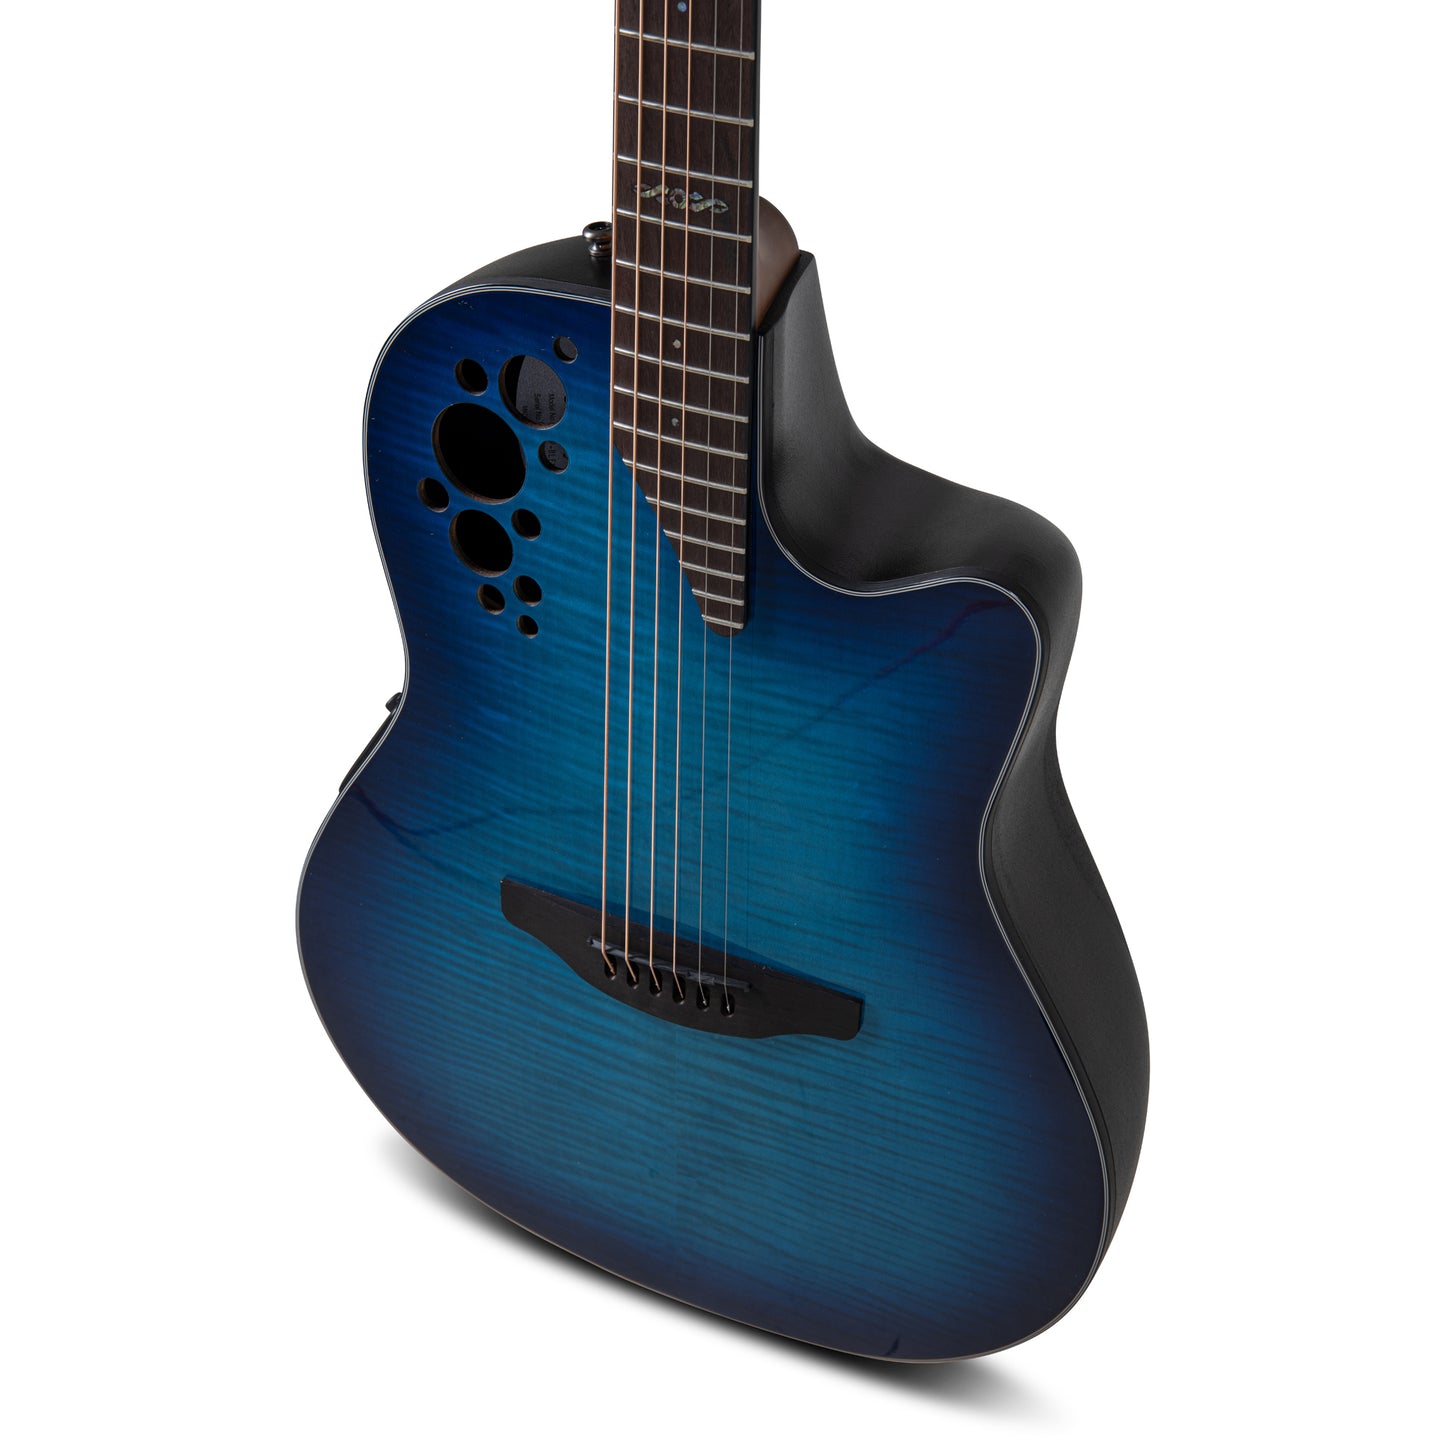 Ovation E-Acoustic Guitar Celebrity Elite Plus Mid Cutaway - Blue Flamed Maple